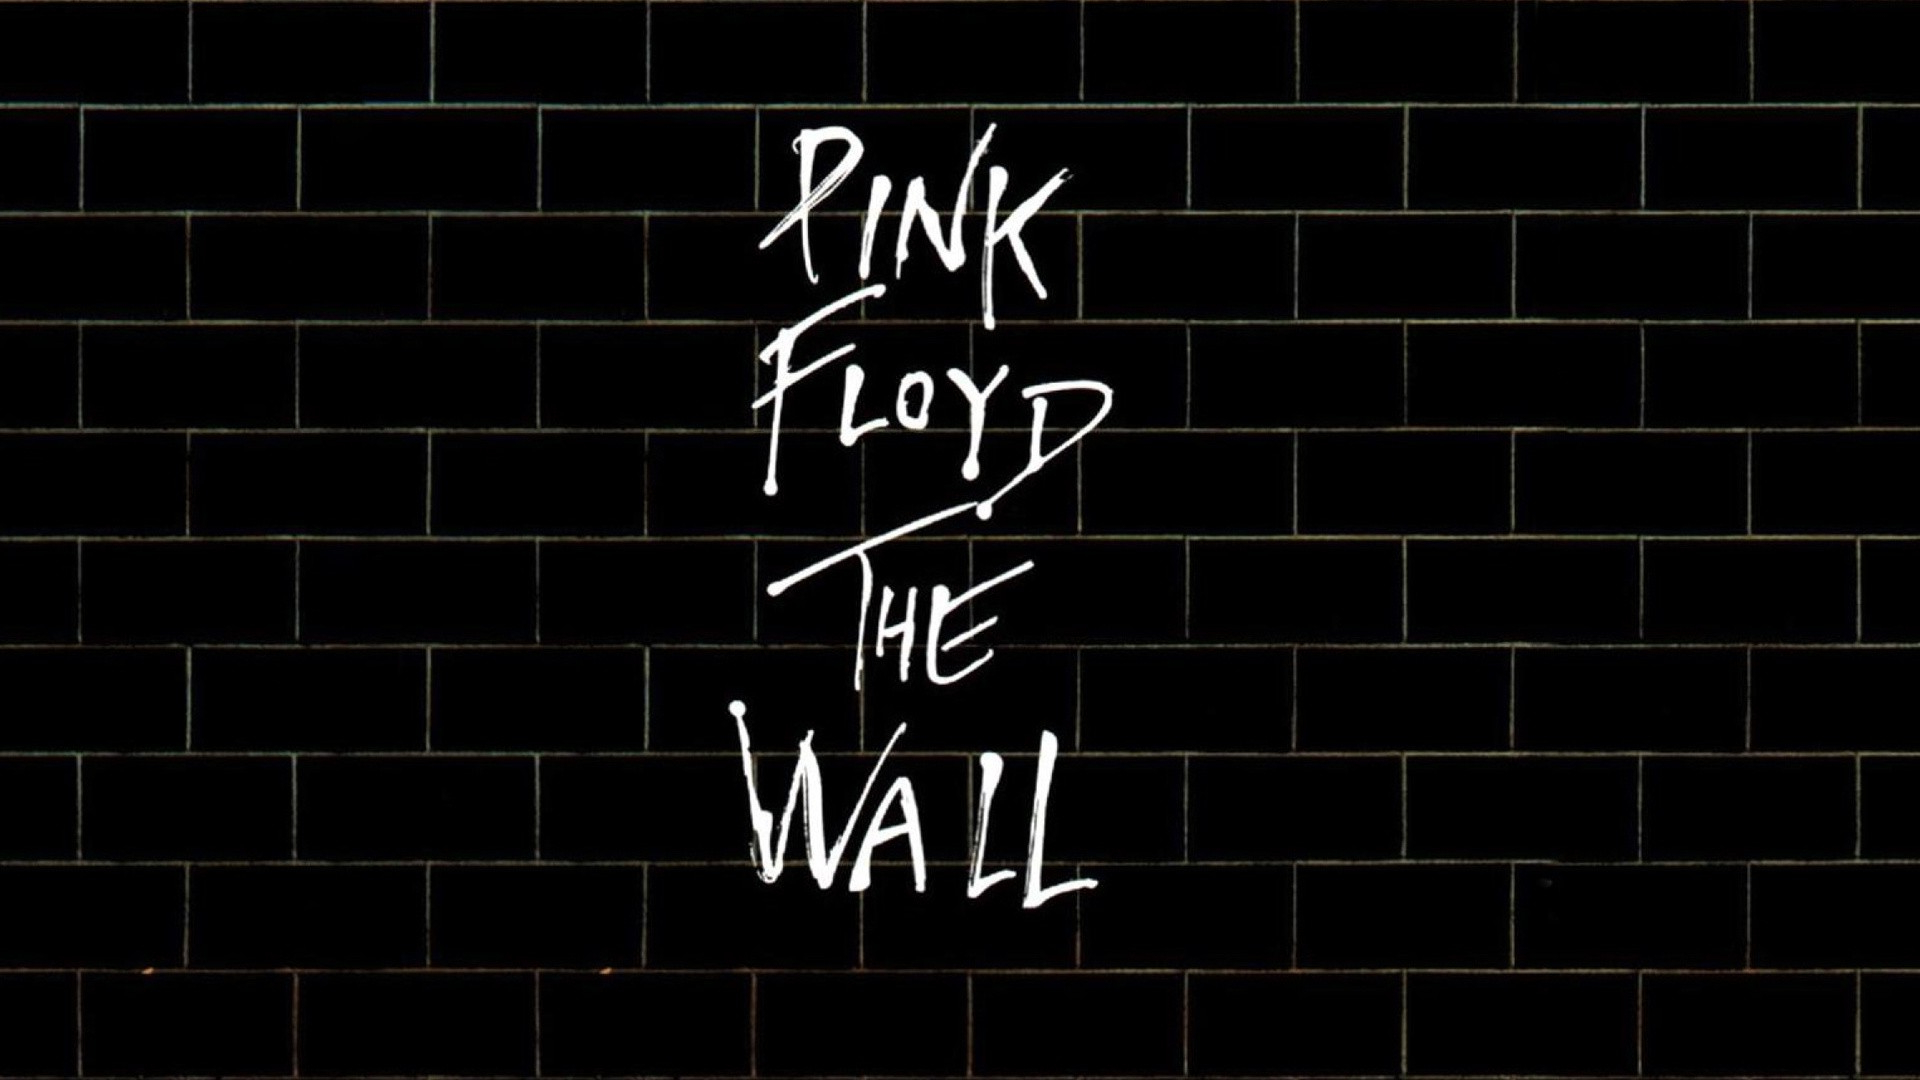 Pink Floyd Album Covers Cover Art Black Background Rock Bands Bricks Band Wallpaper:1920x1080